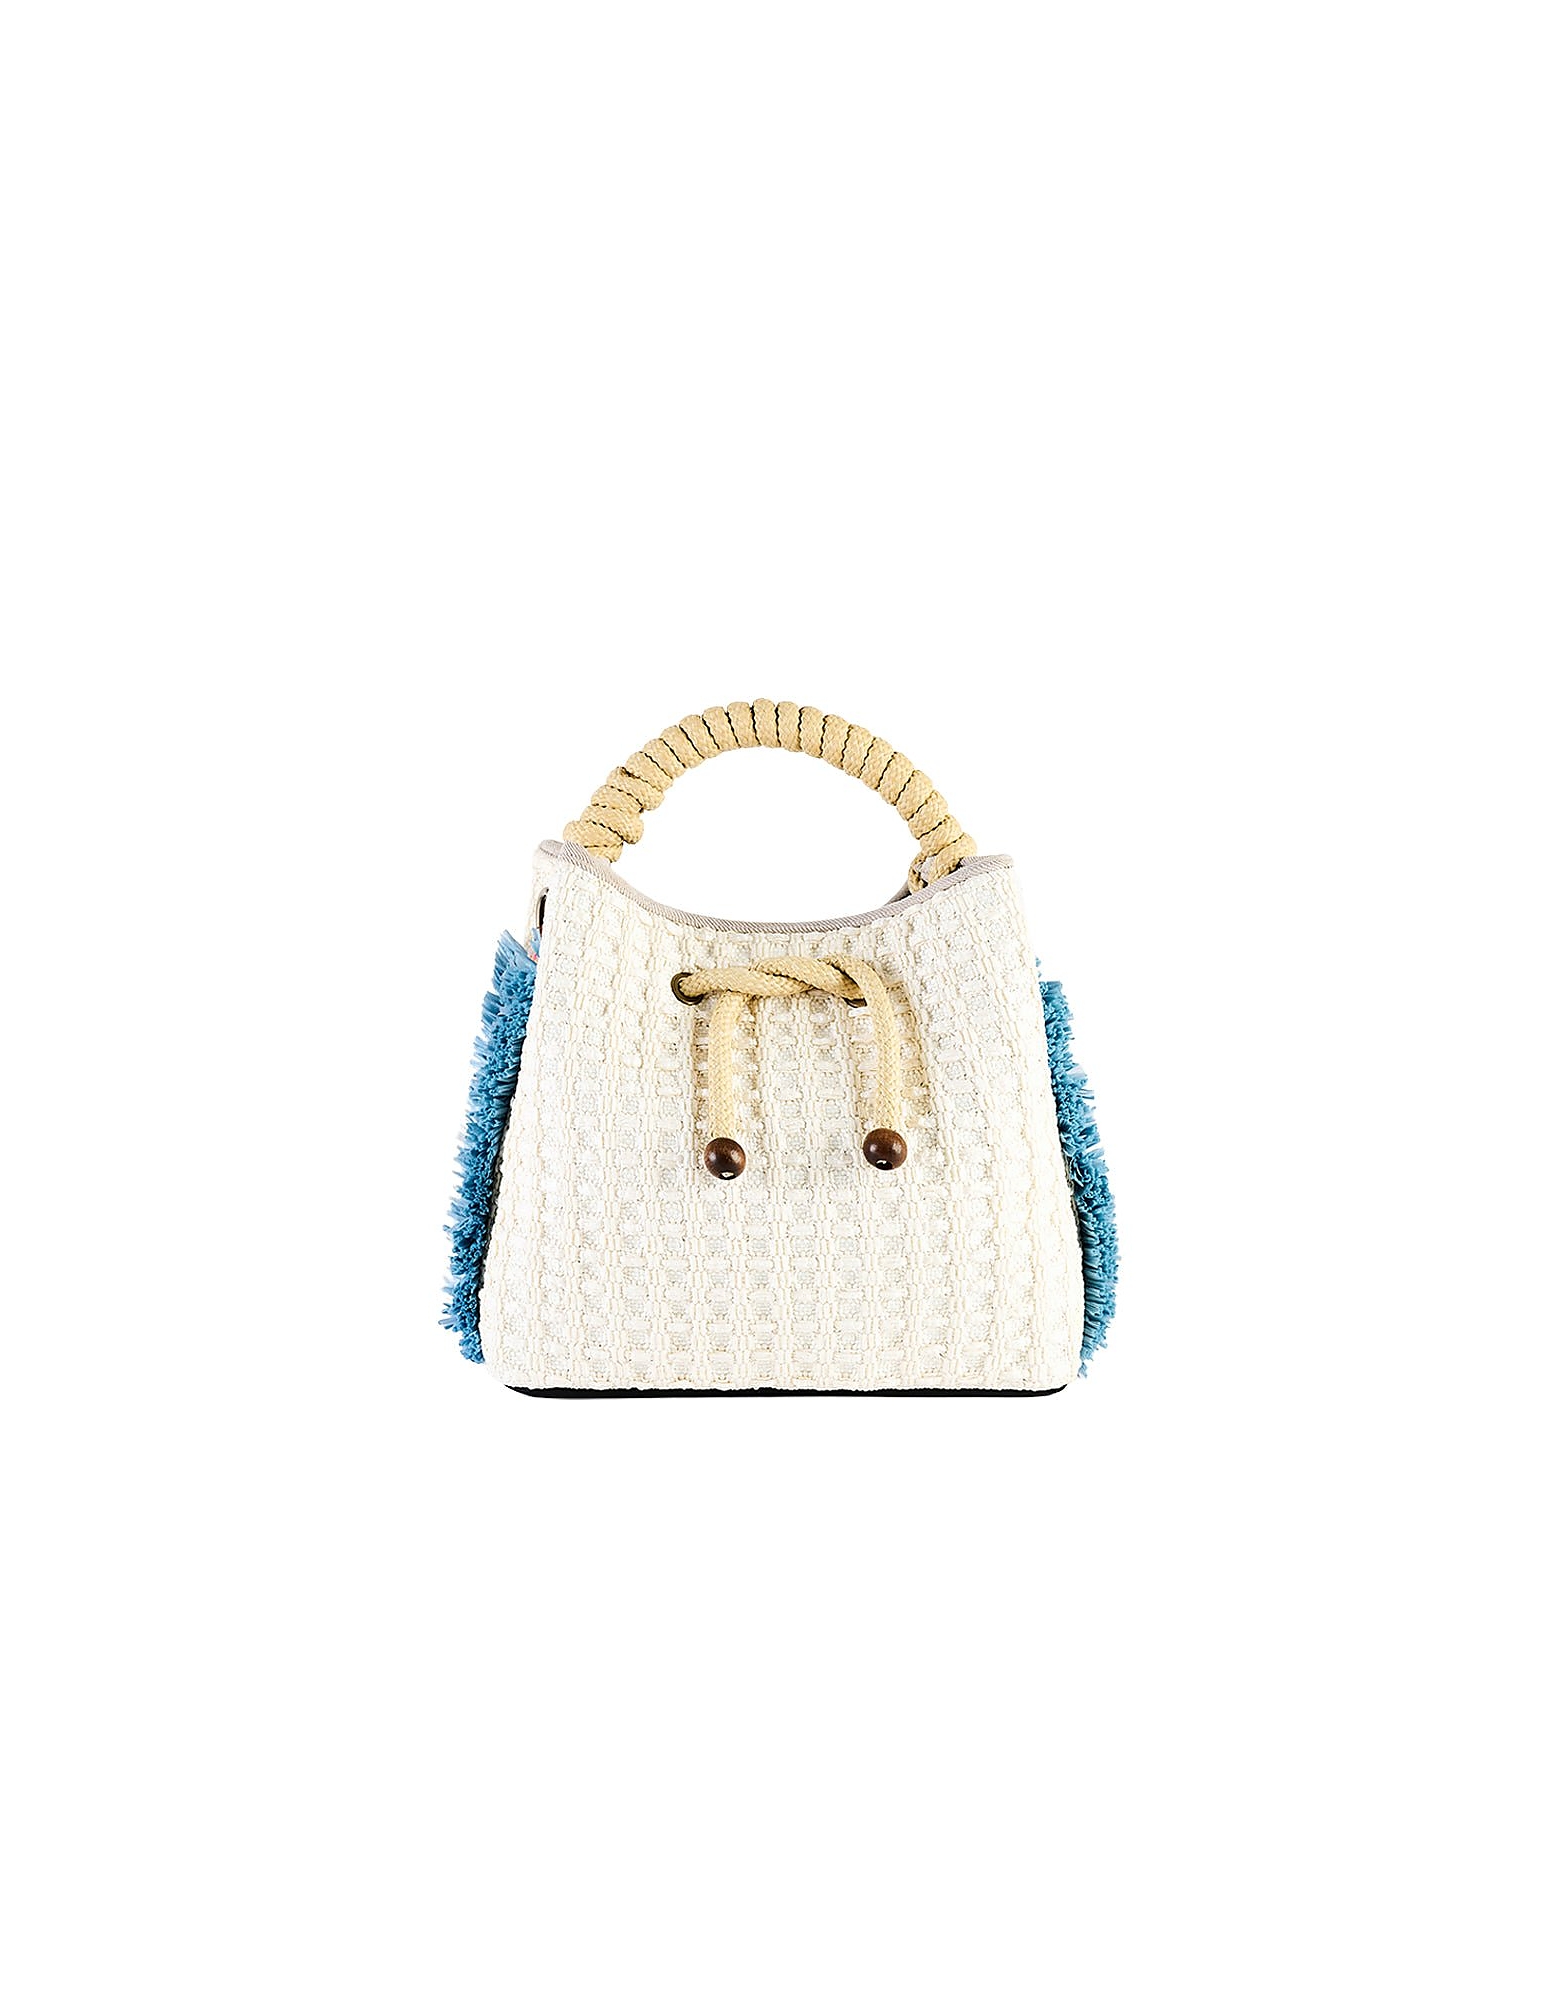 Viamailbag Designer Handbags Cayos Fringe - Top Handle Bag In Blanc